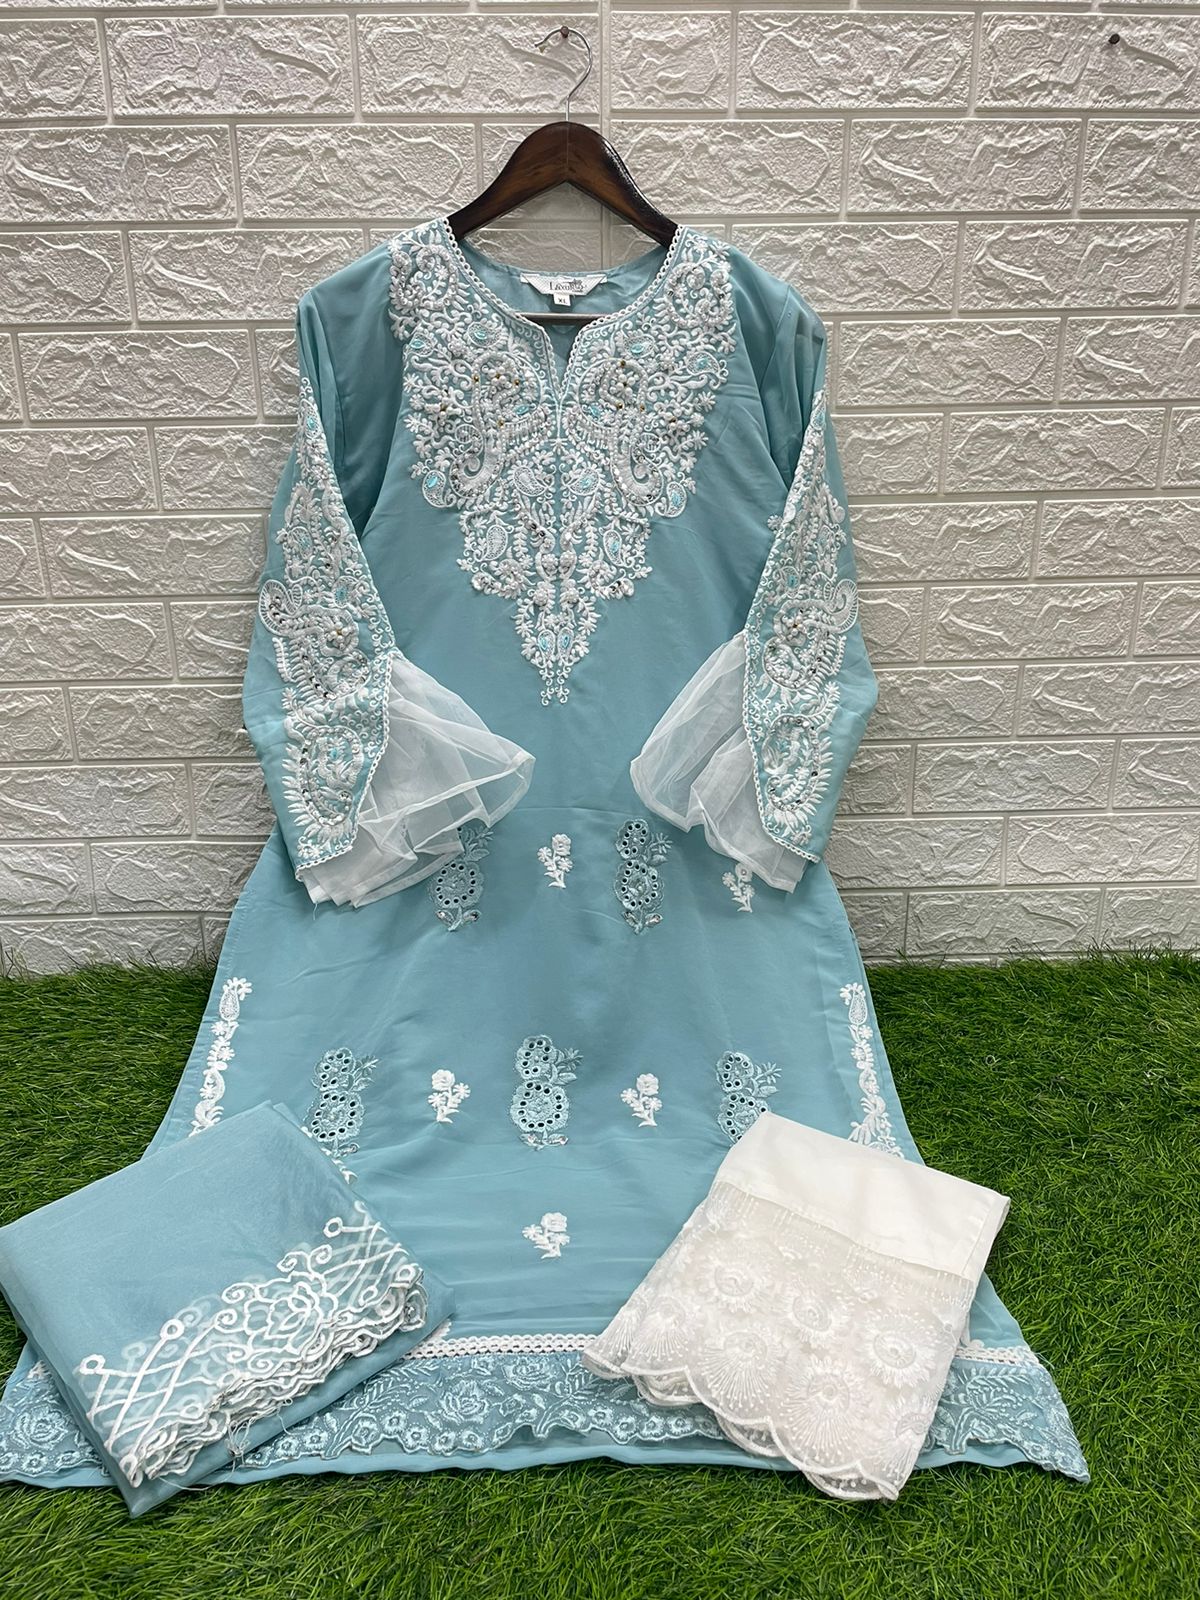 1283 Laxuria Trendz Georgette Pakistani Readymade Suits